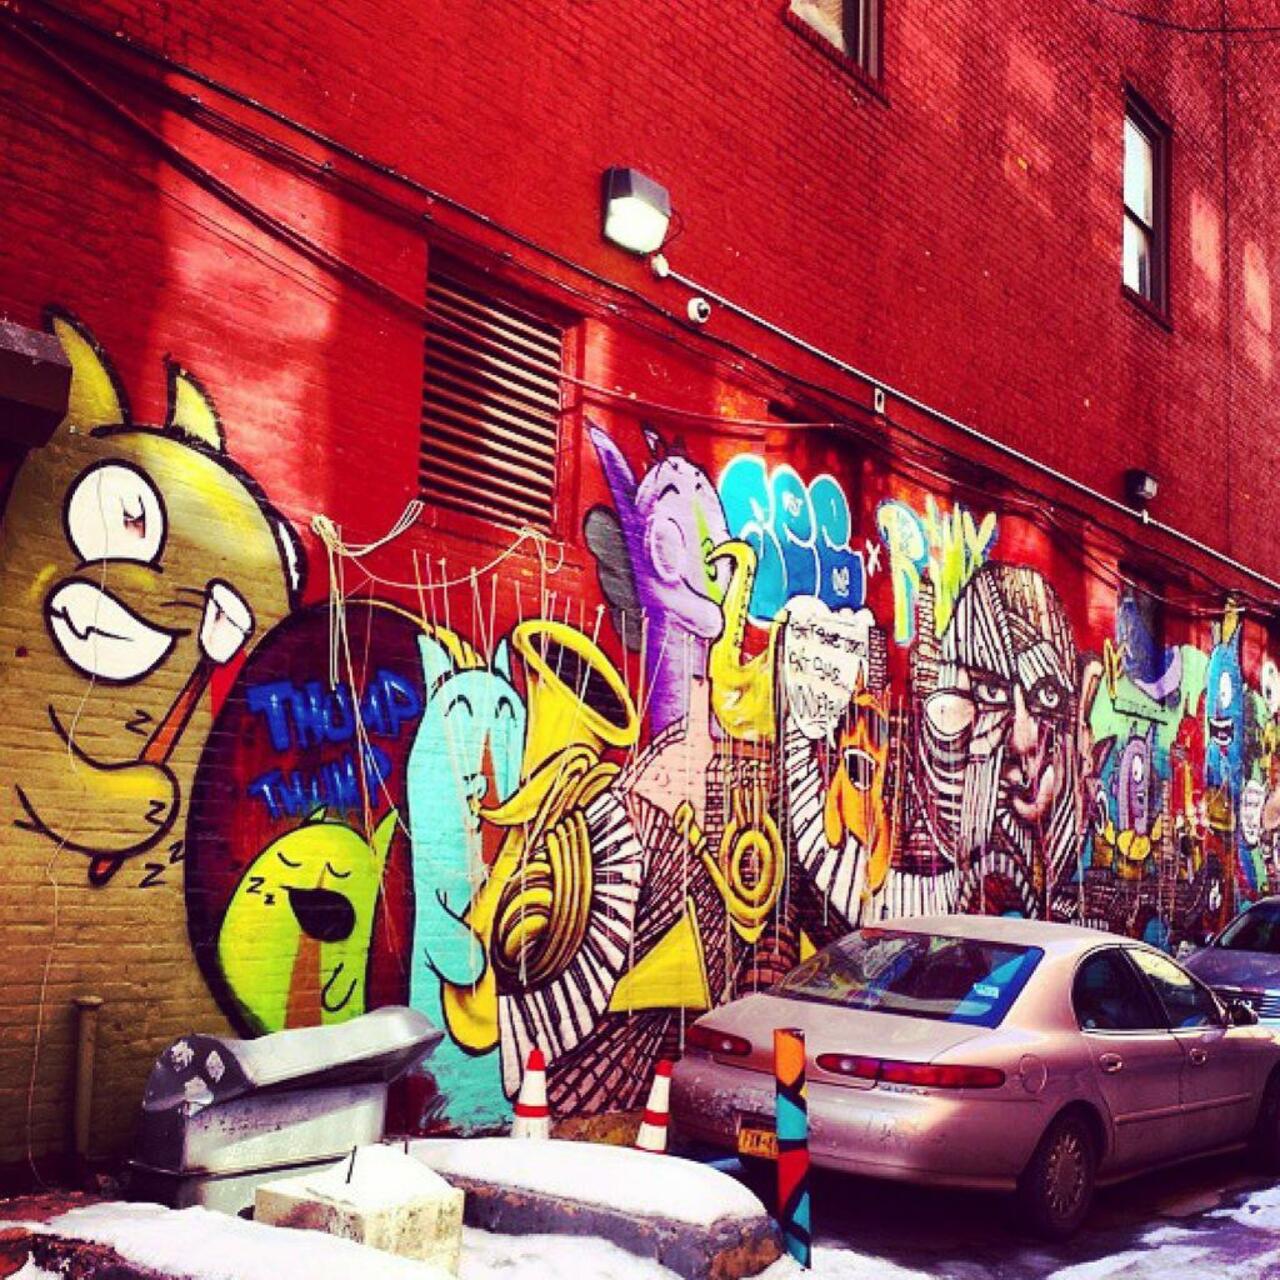 #streetart #graffiti #urbanart #murales #mural #stencil http://t.co/dguTsPIwmU